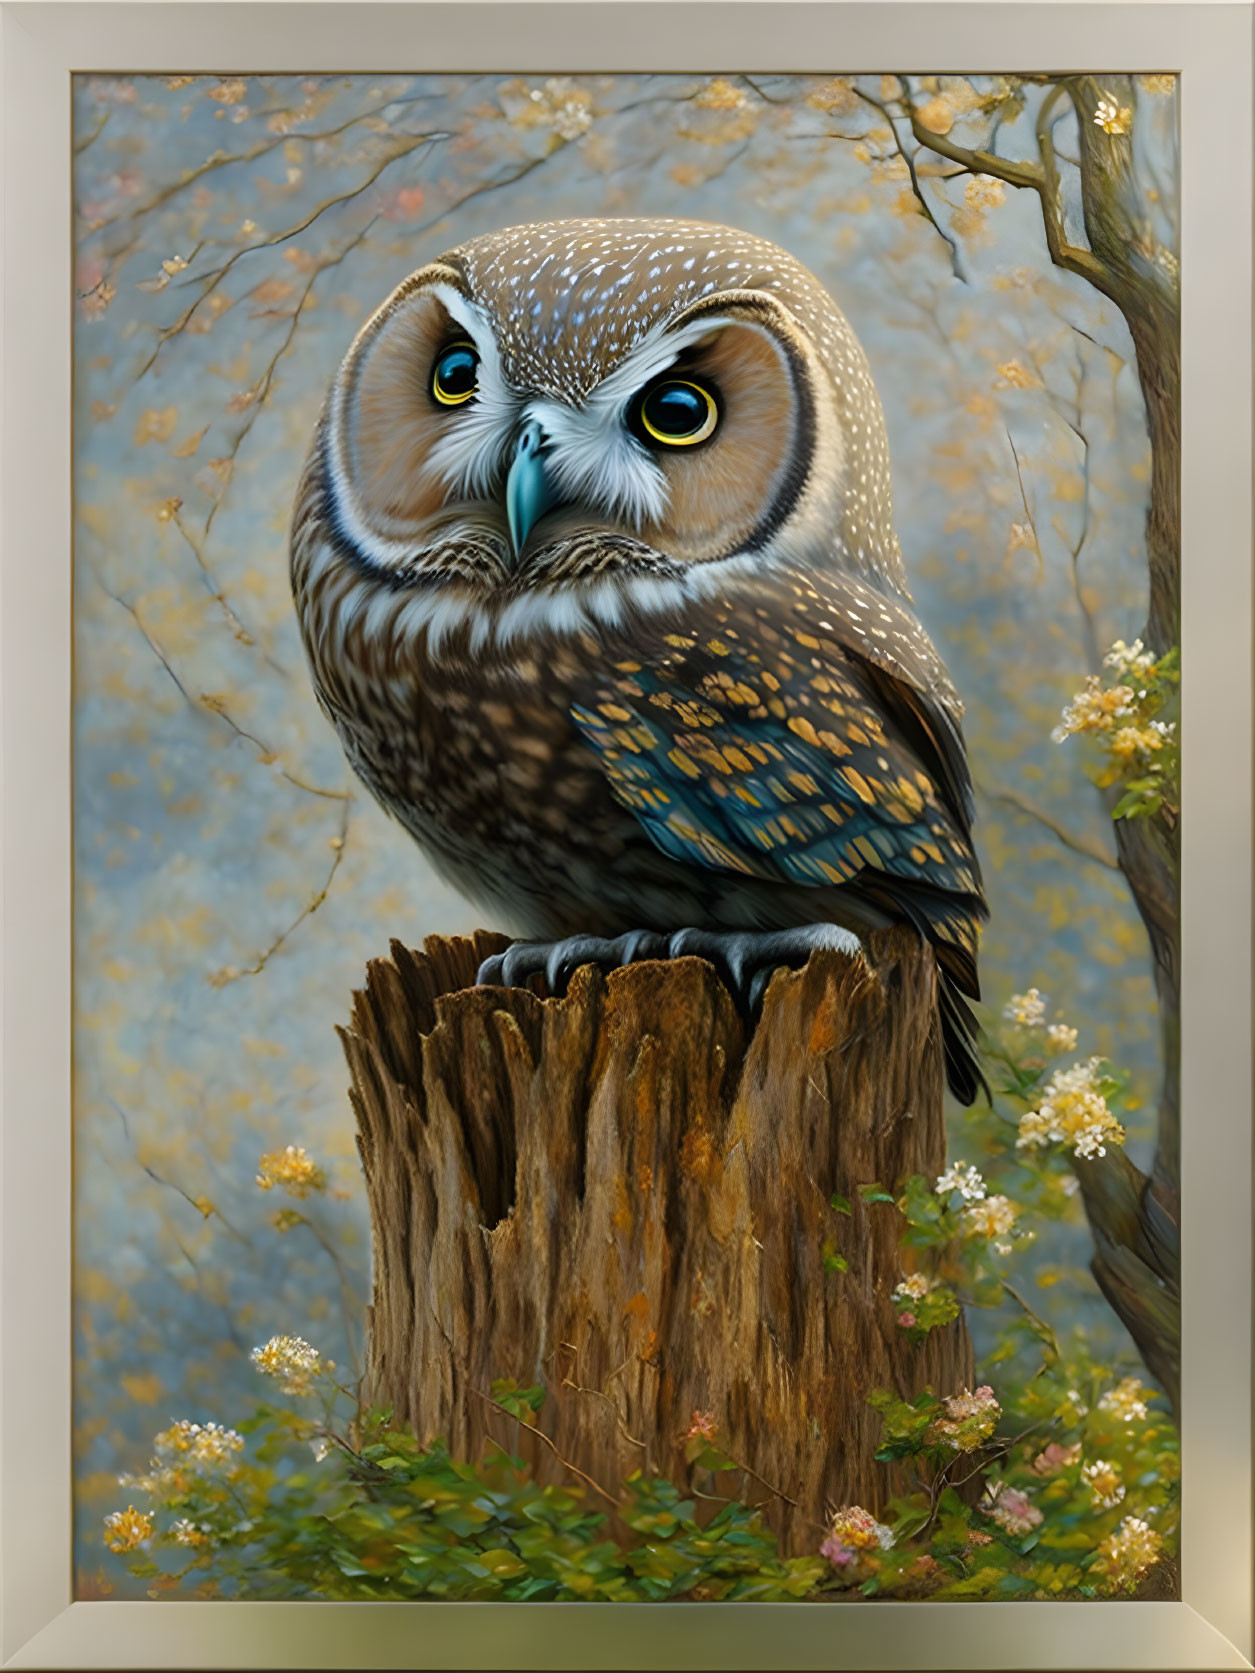 OWL SITTING ON A TREE STUMP,,,,